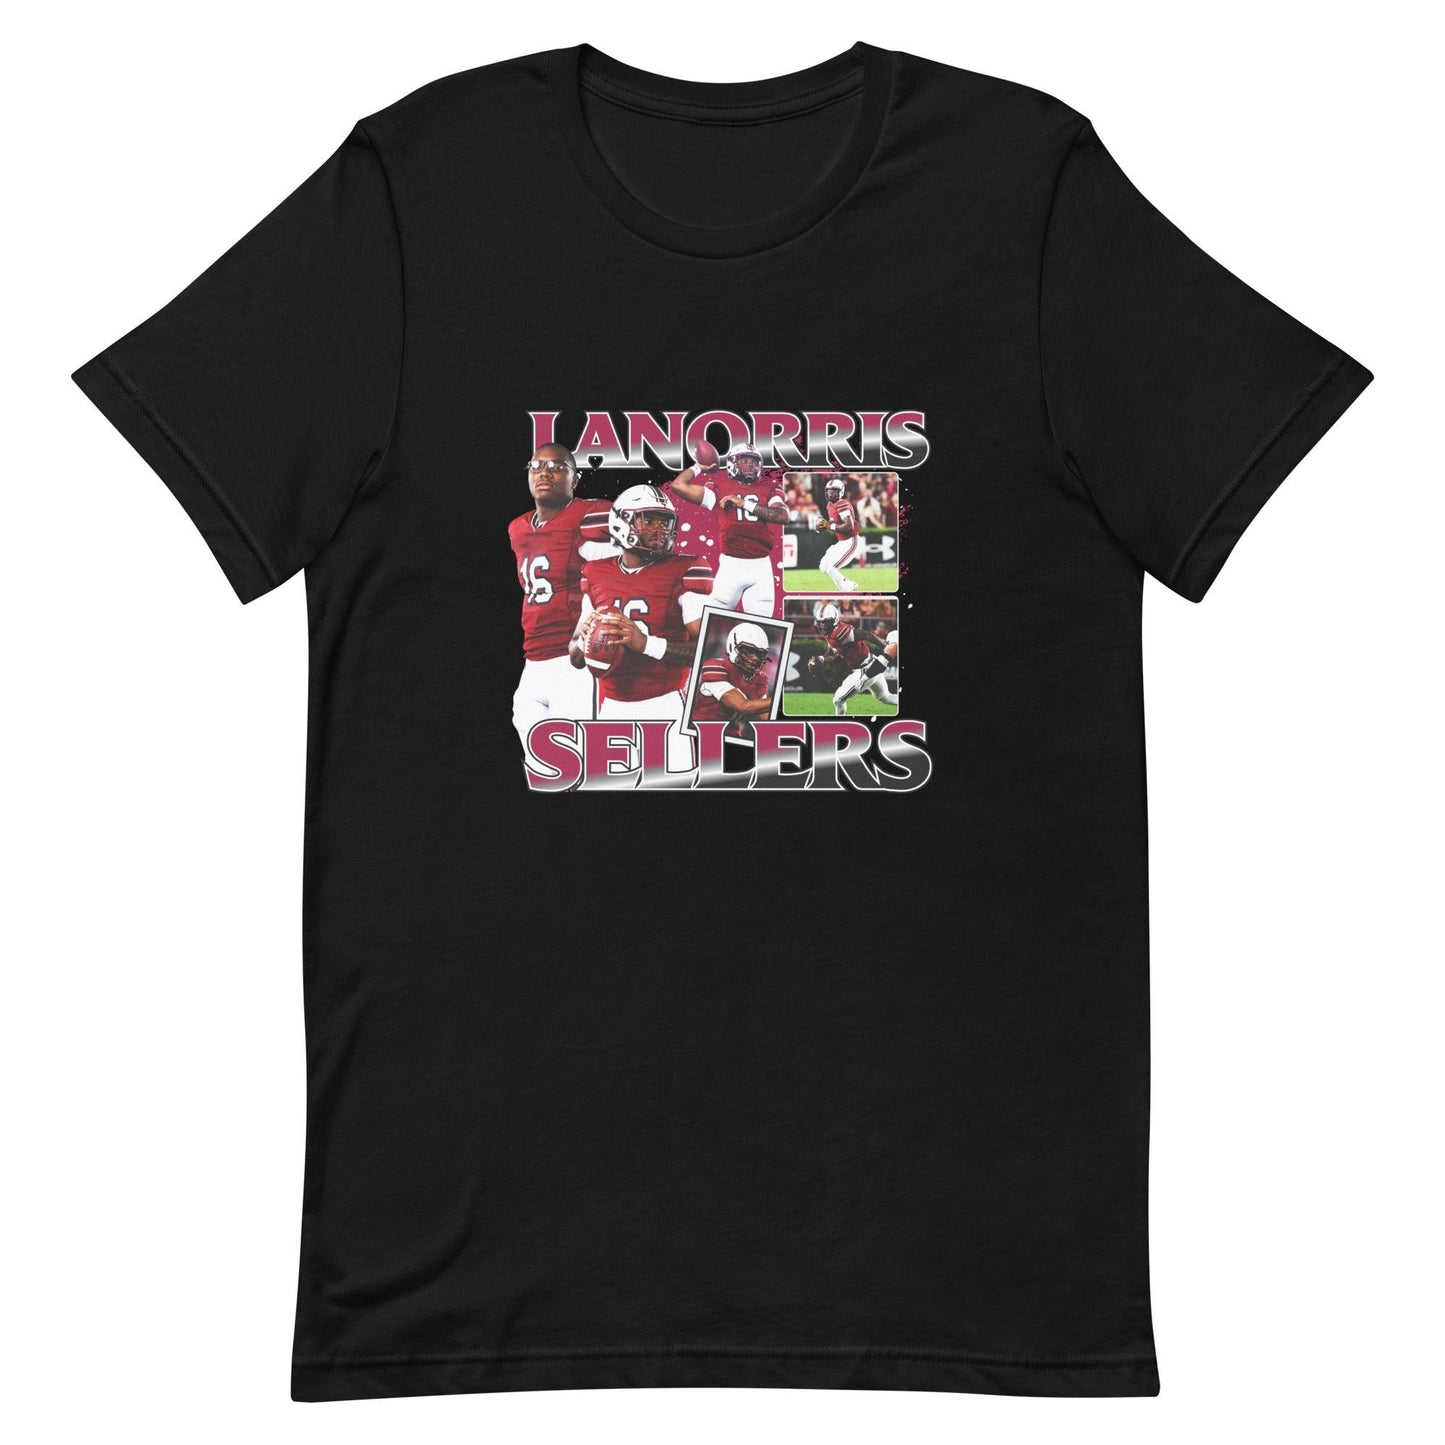 Lanorris Sellers "Vintage" t-shirt - Fan Arch